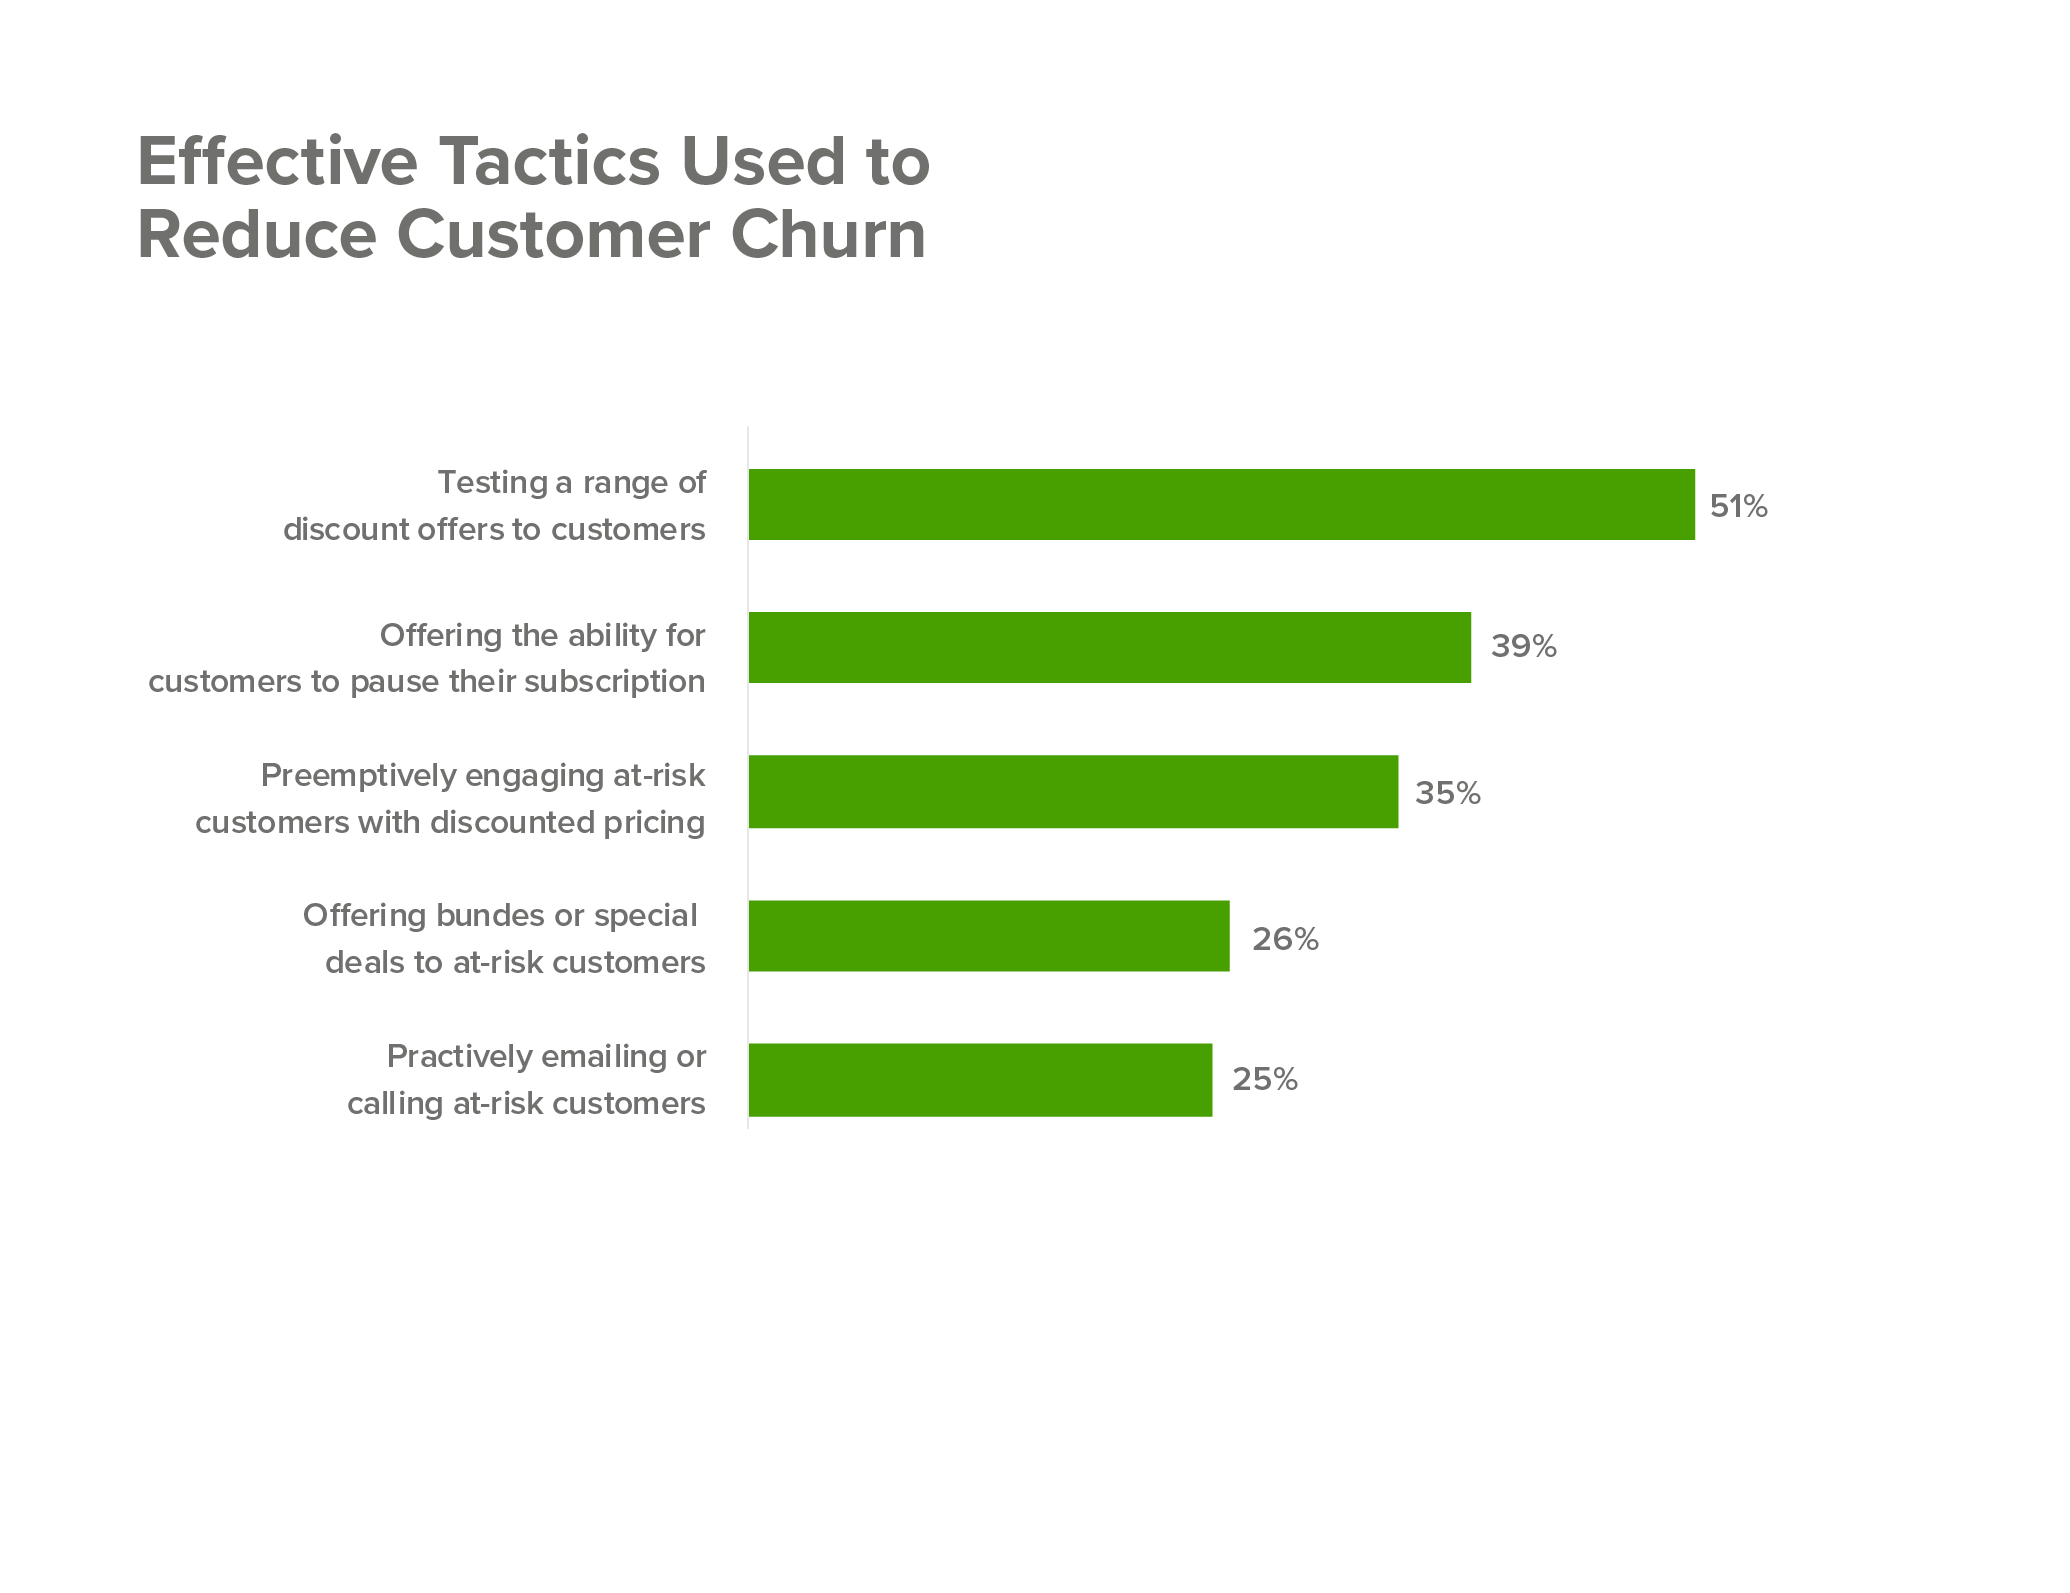 Effective customer churn tactics